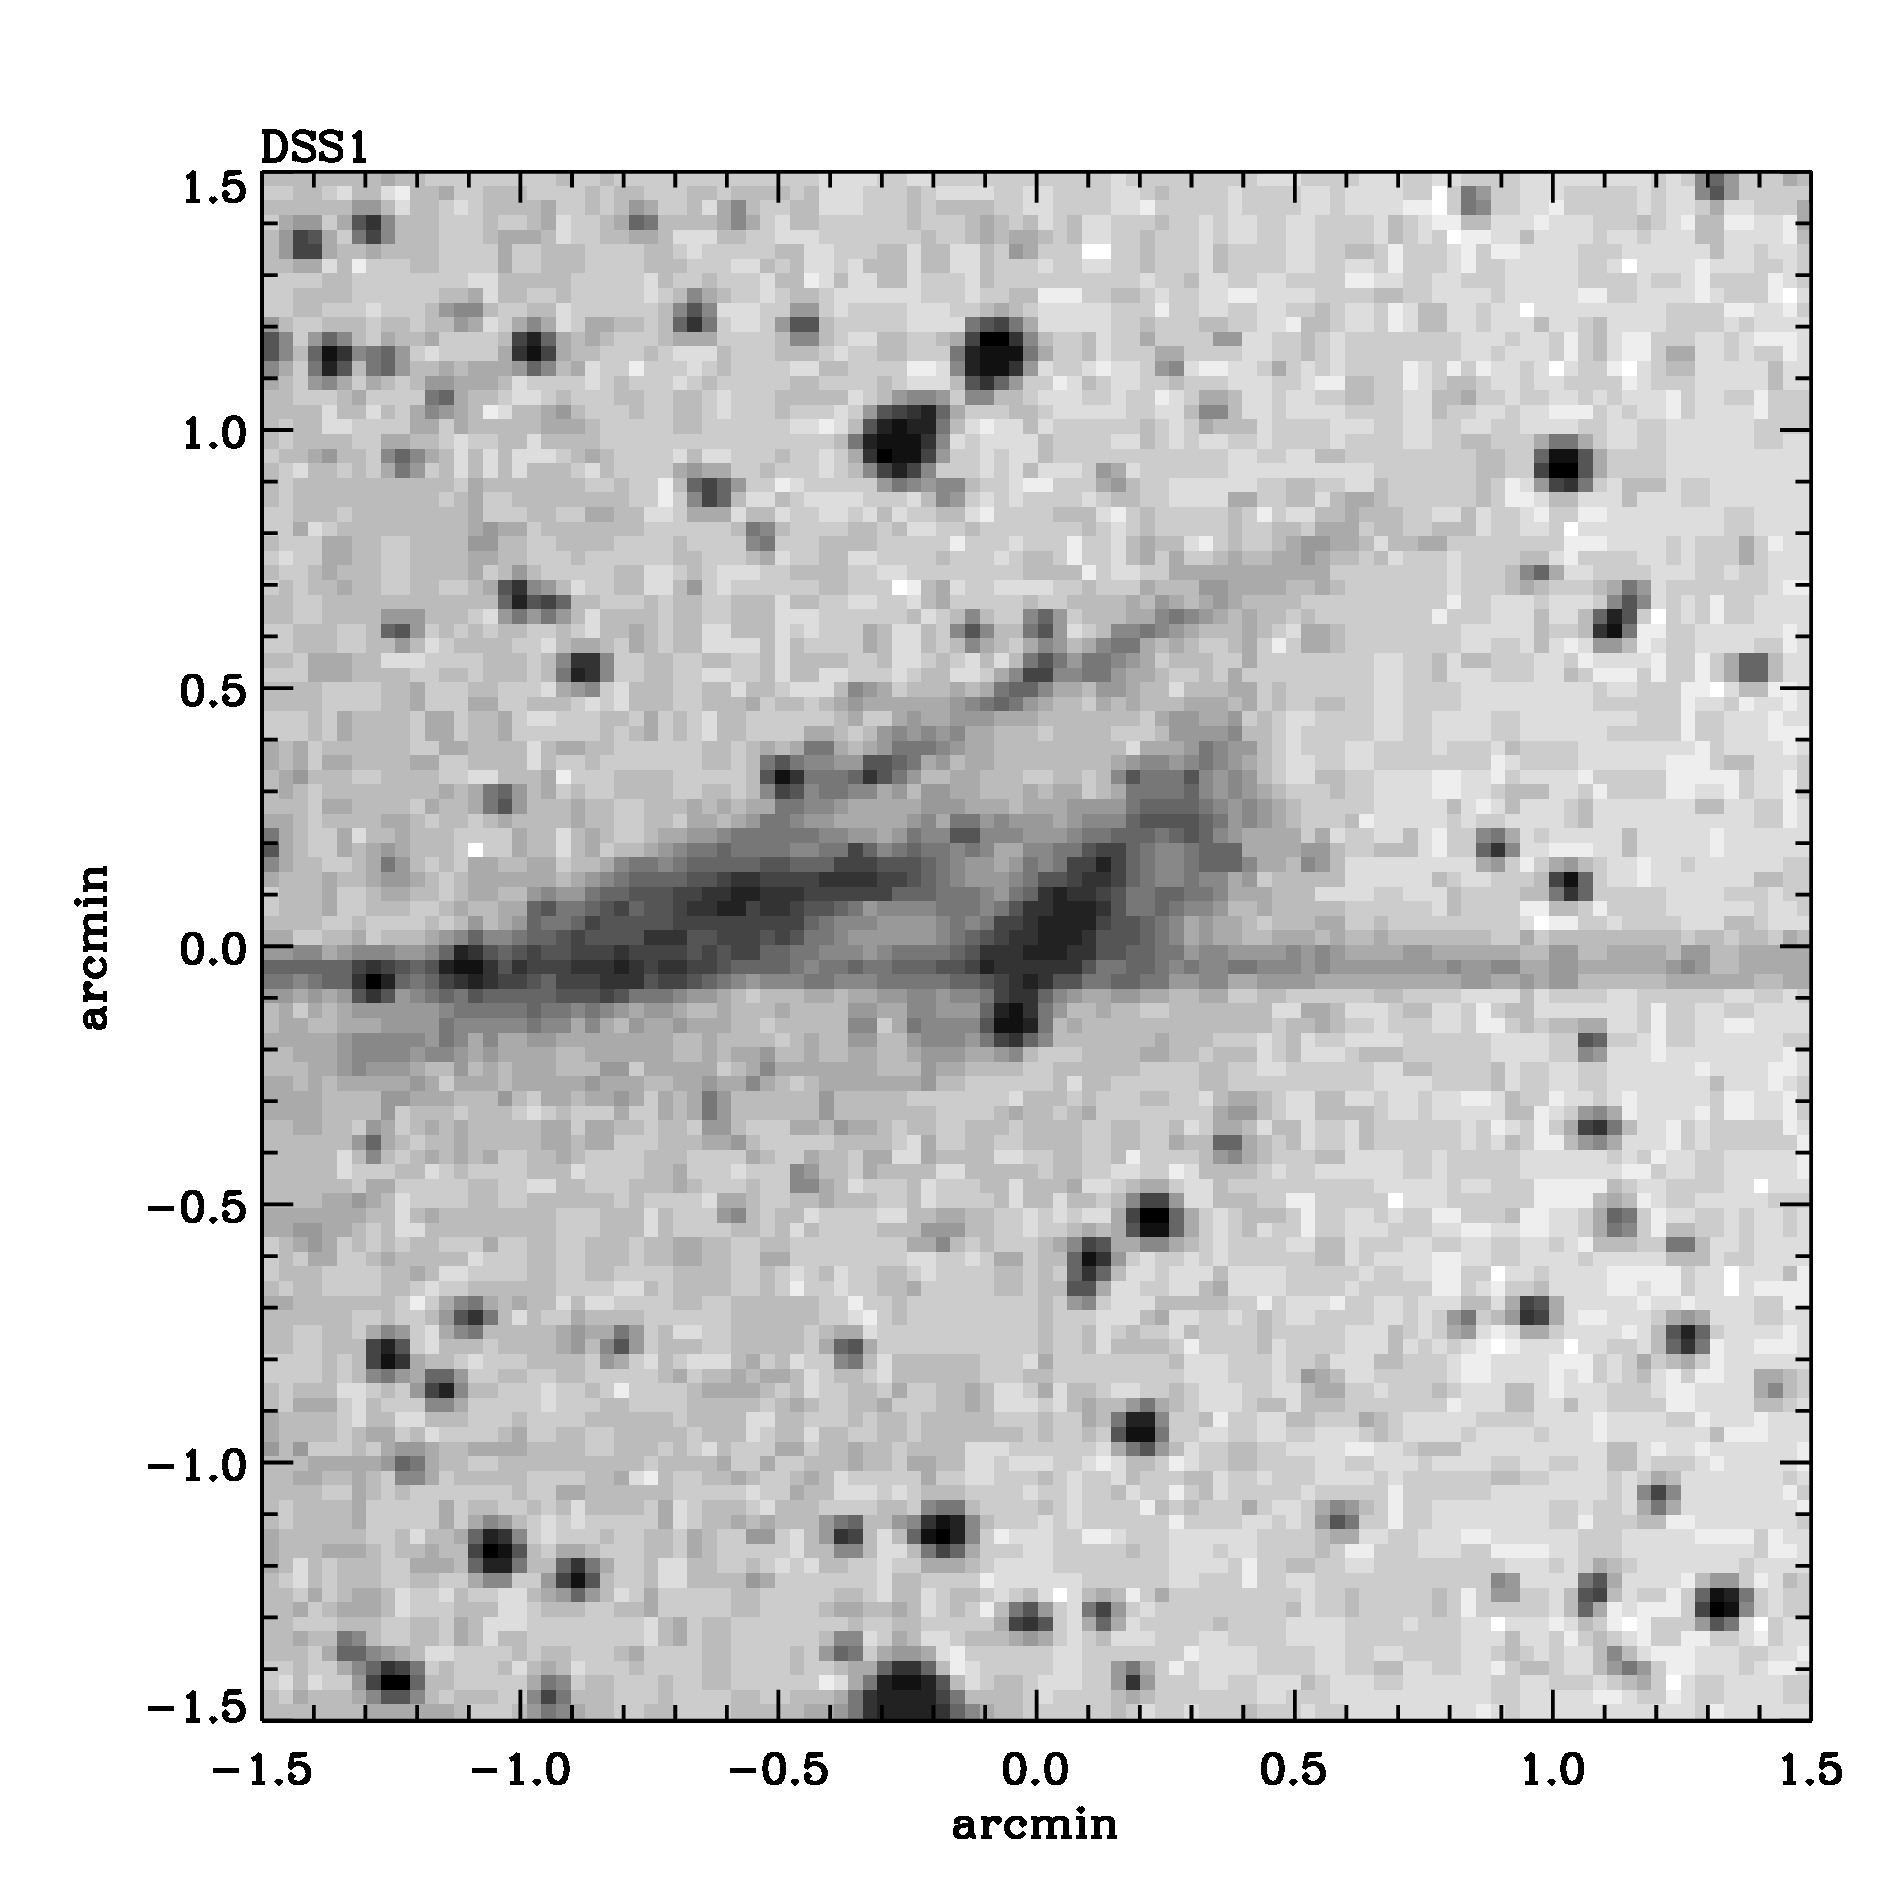 Optical image for SWIFT J1457.8-4308